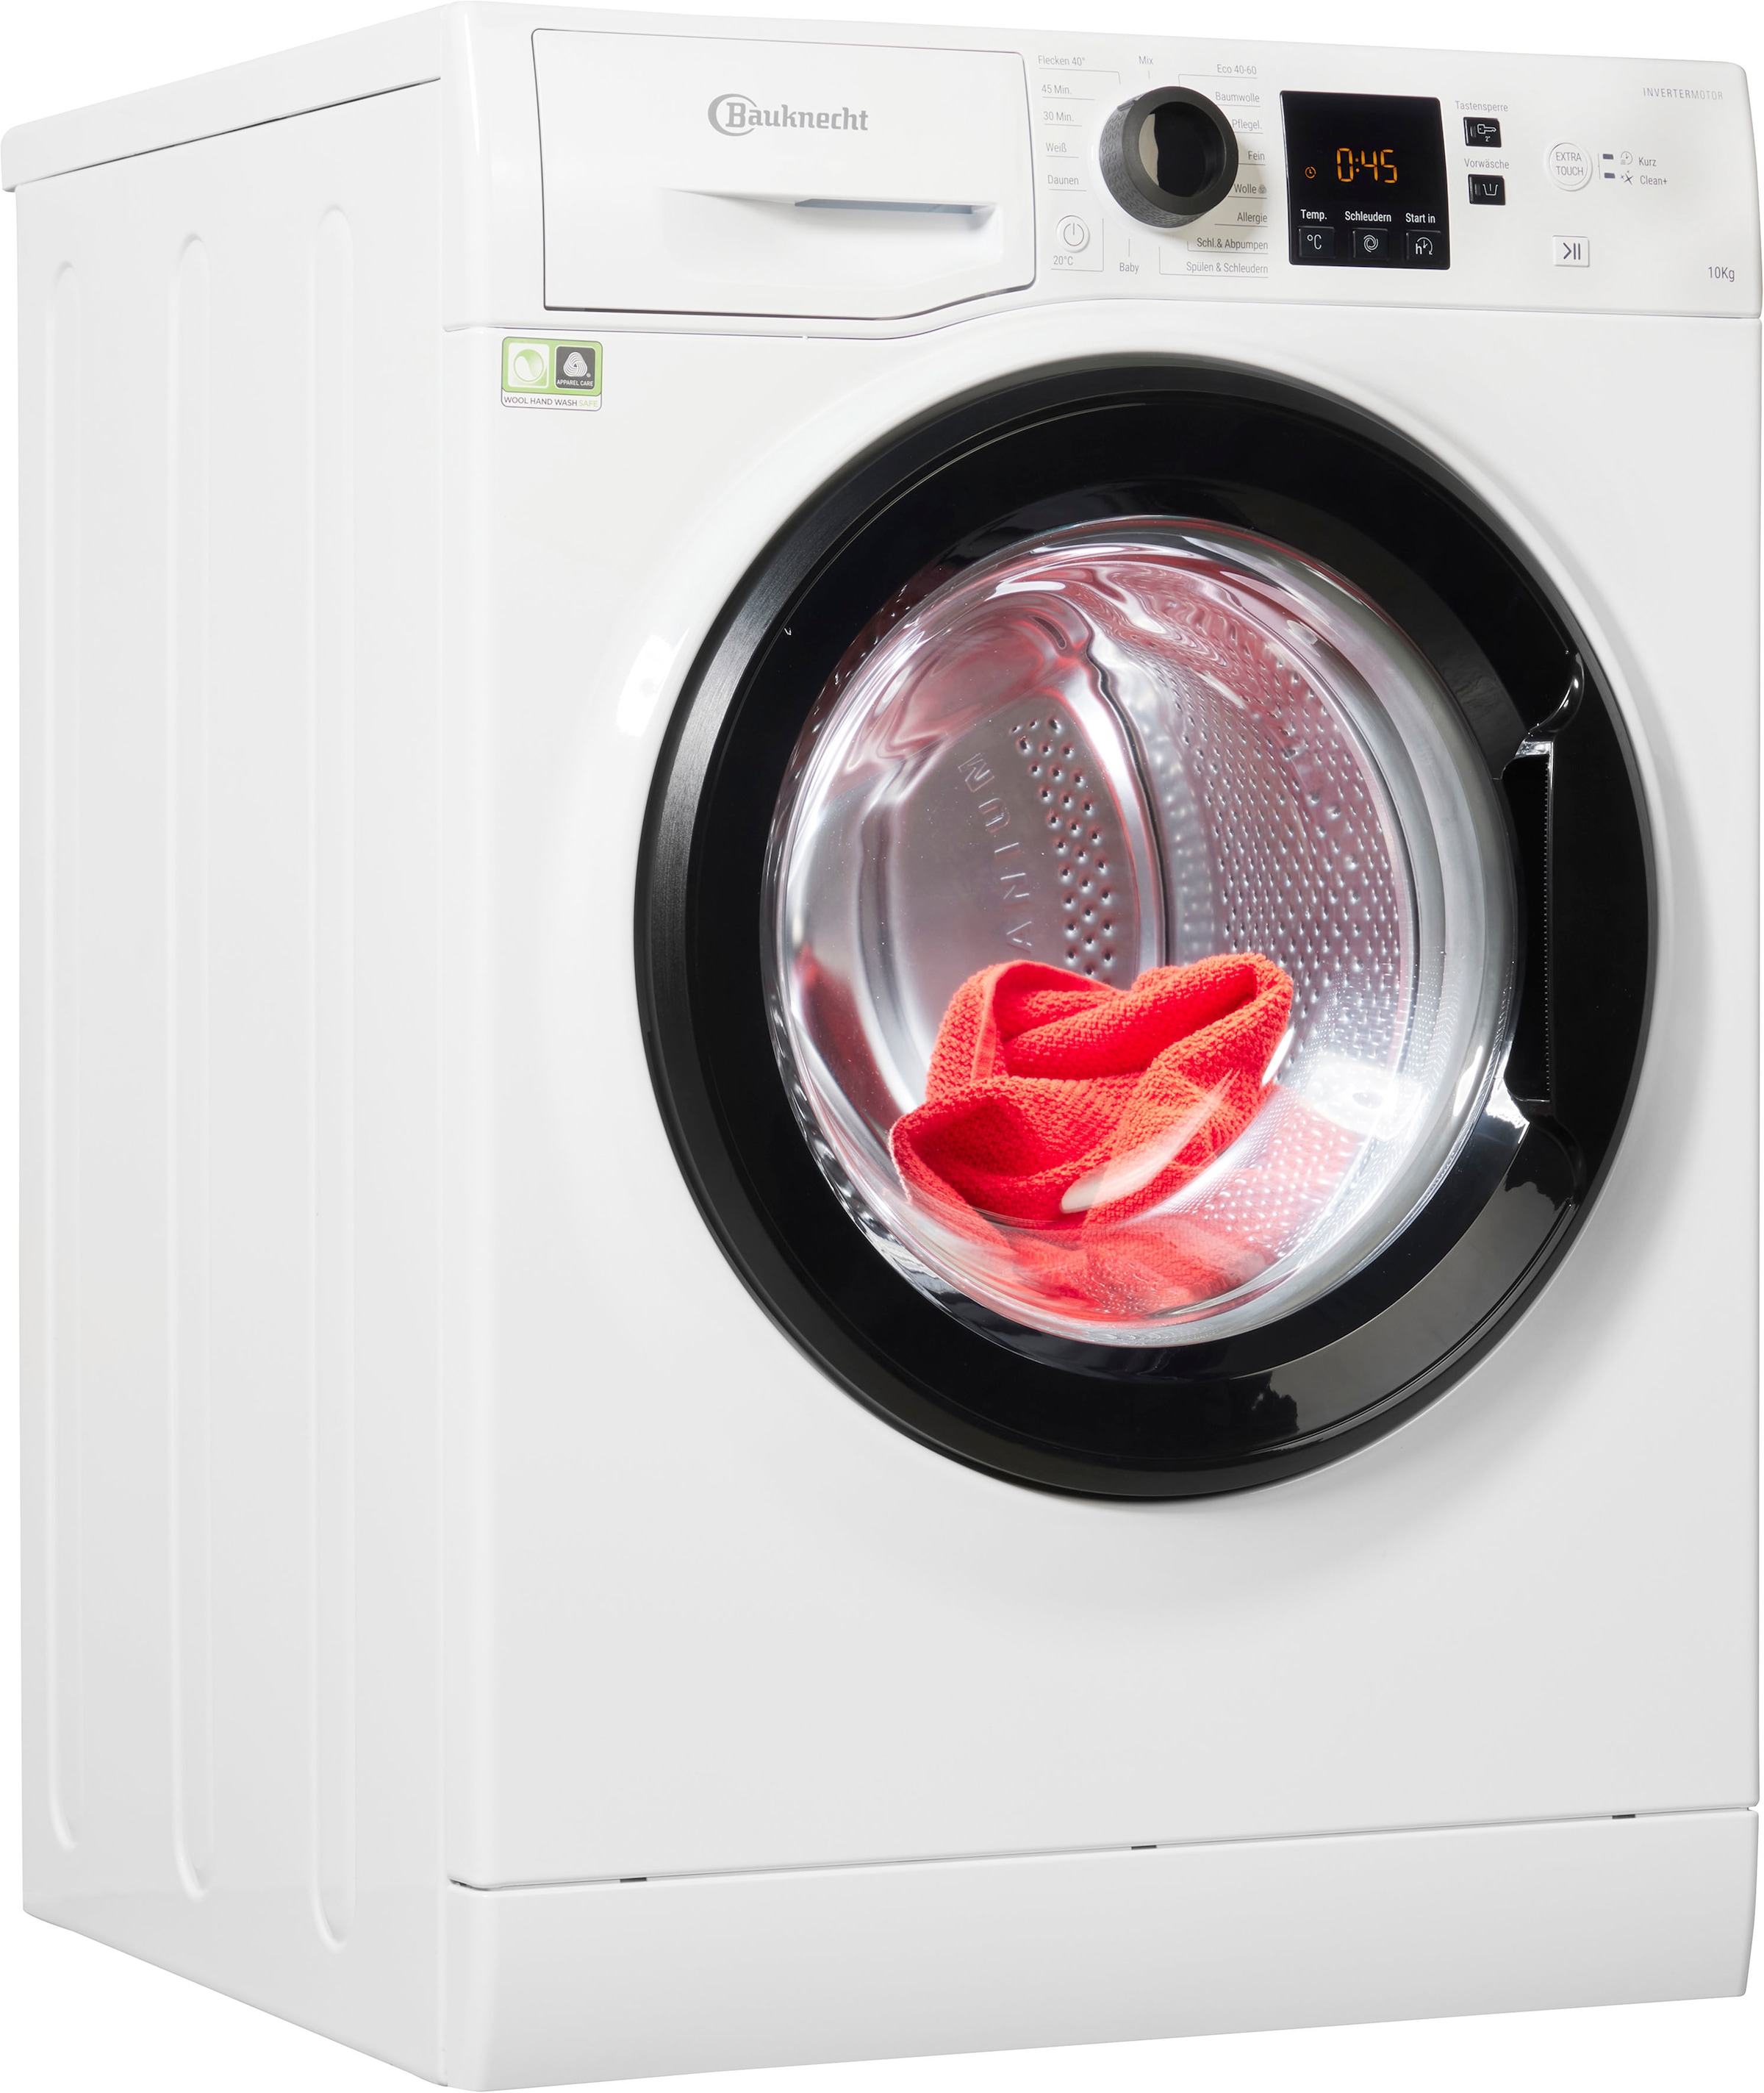 BAUKNECHT Waschmaschine »BPW A«, BPW 1400 1014 kaufen A, U/min 1014 10 kg, online